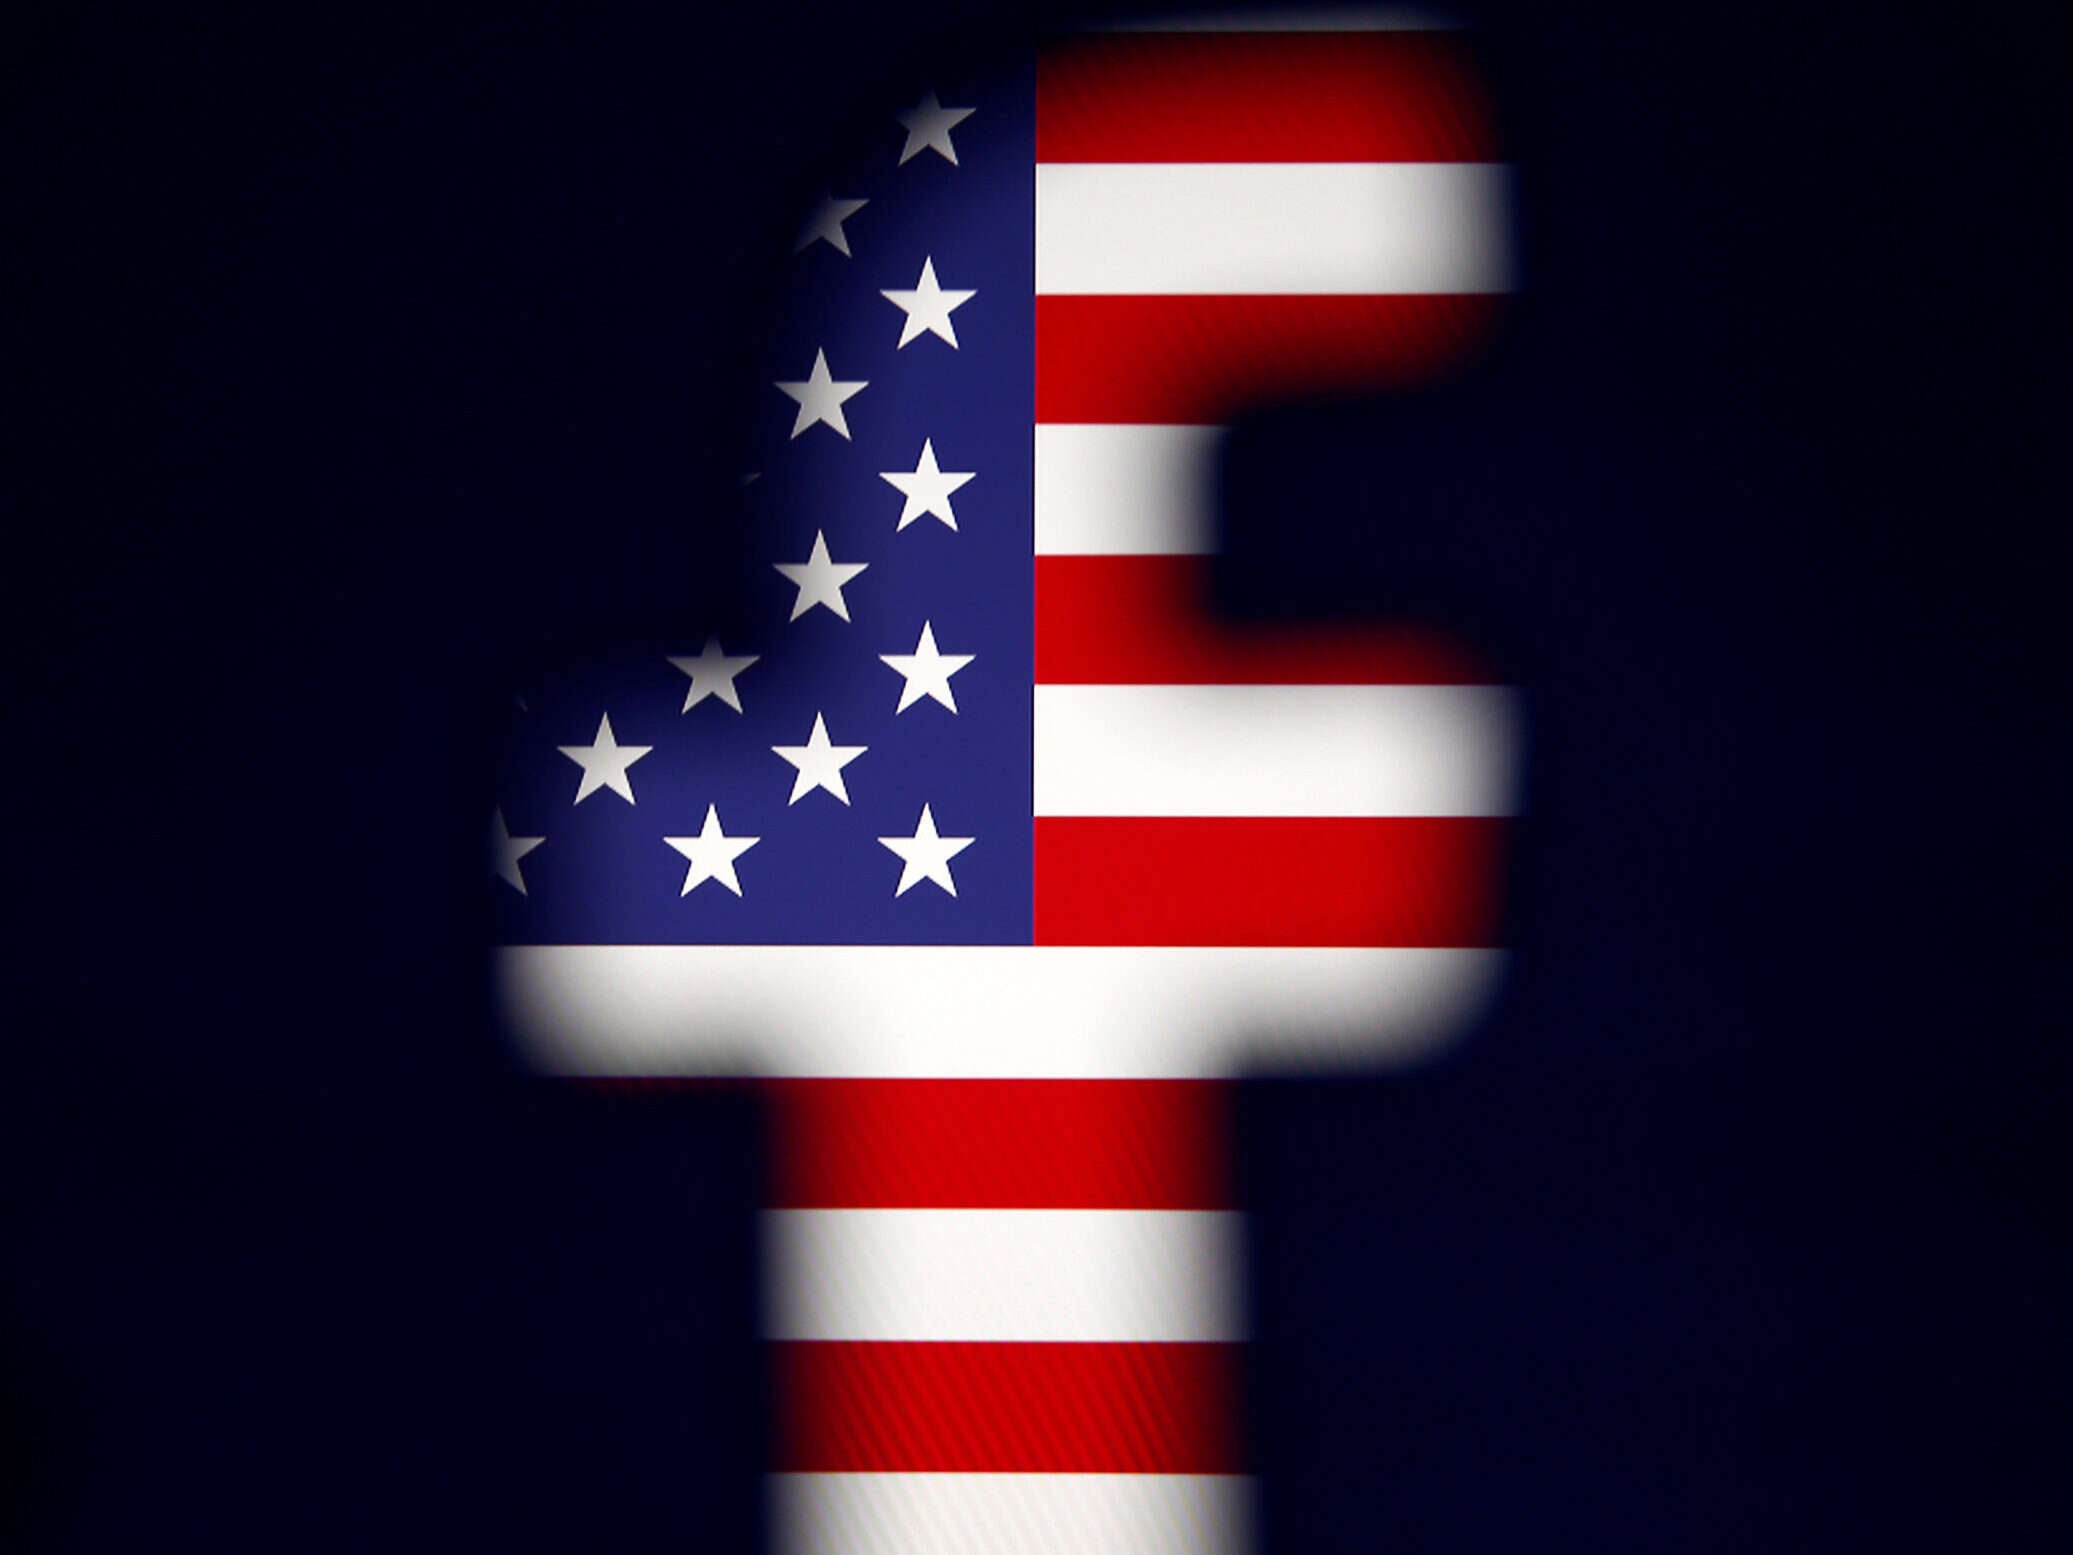 Facebook cracks down on 'deepfake' videos ahead of US presidential election